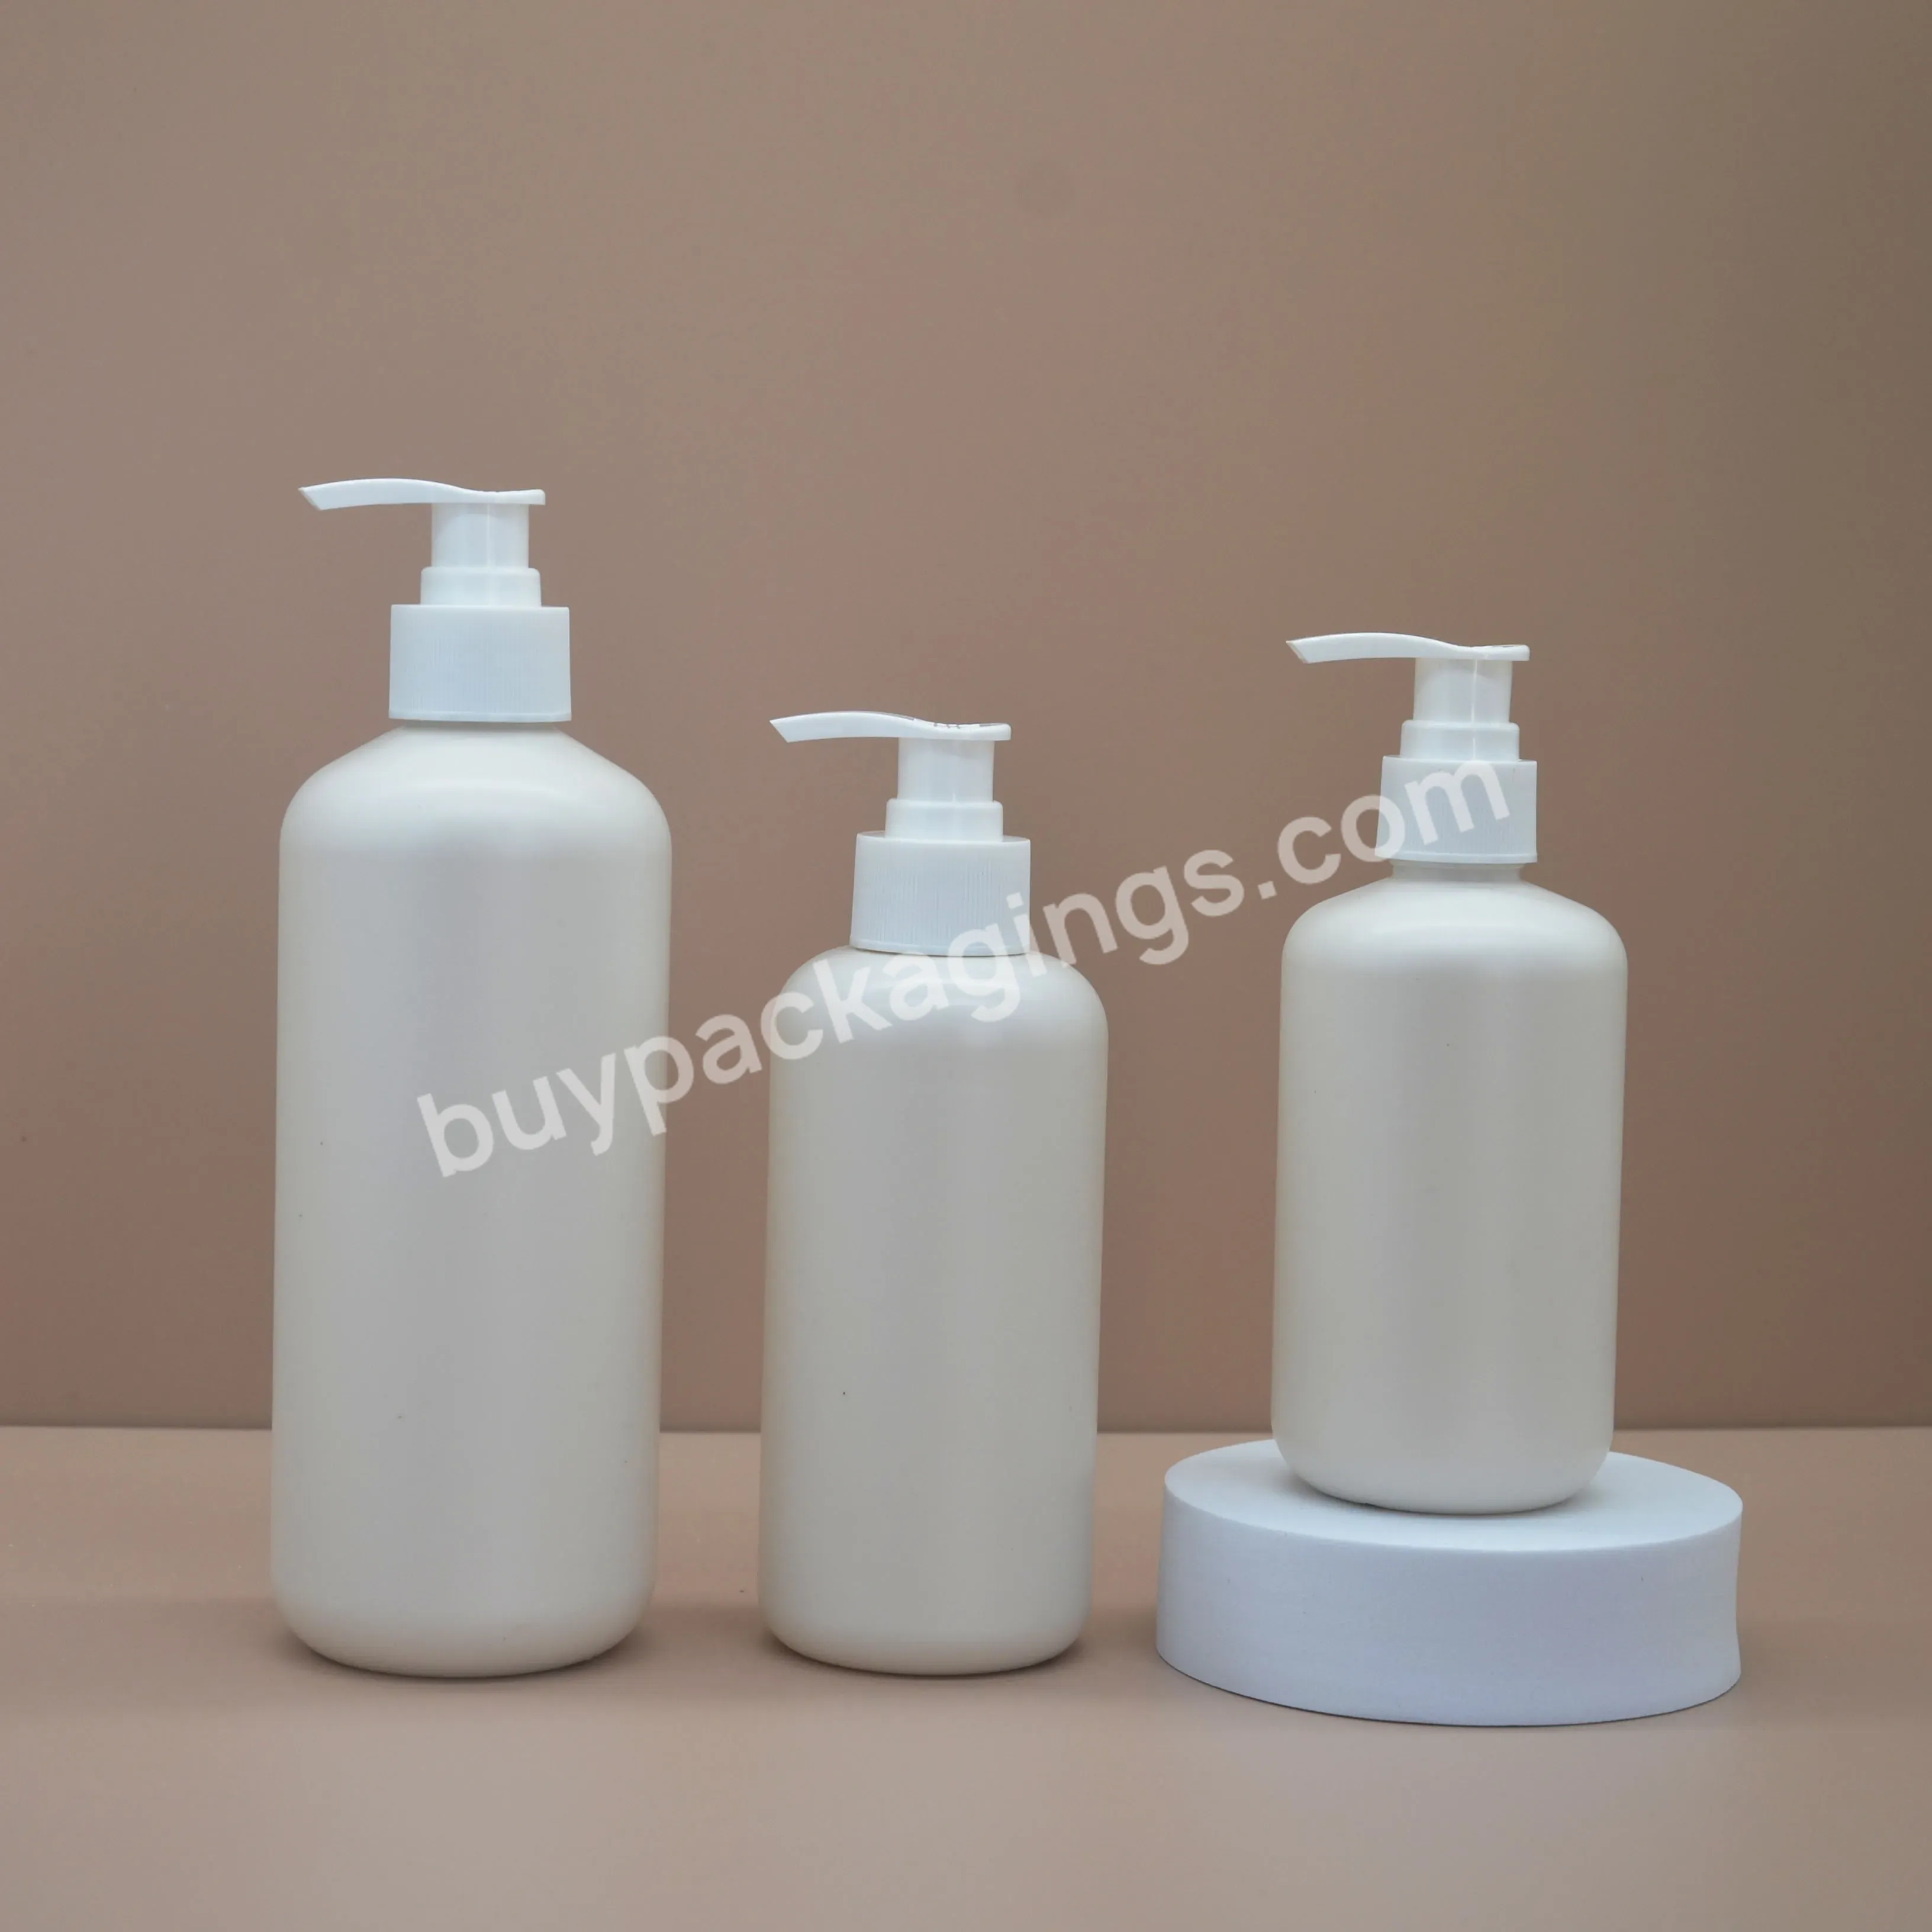 100% Biodegradable Pla Plastic Bottle Shampoo Shower Gel Press Pump Bottle Body Care Packaging Material - Buy 100% Biodegradable Pla Plastic Bottle,Shampoo Shower Gel Press Pump Bottle,Body Care Packaging Materials.